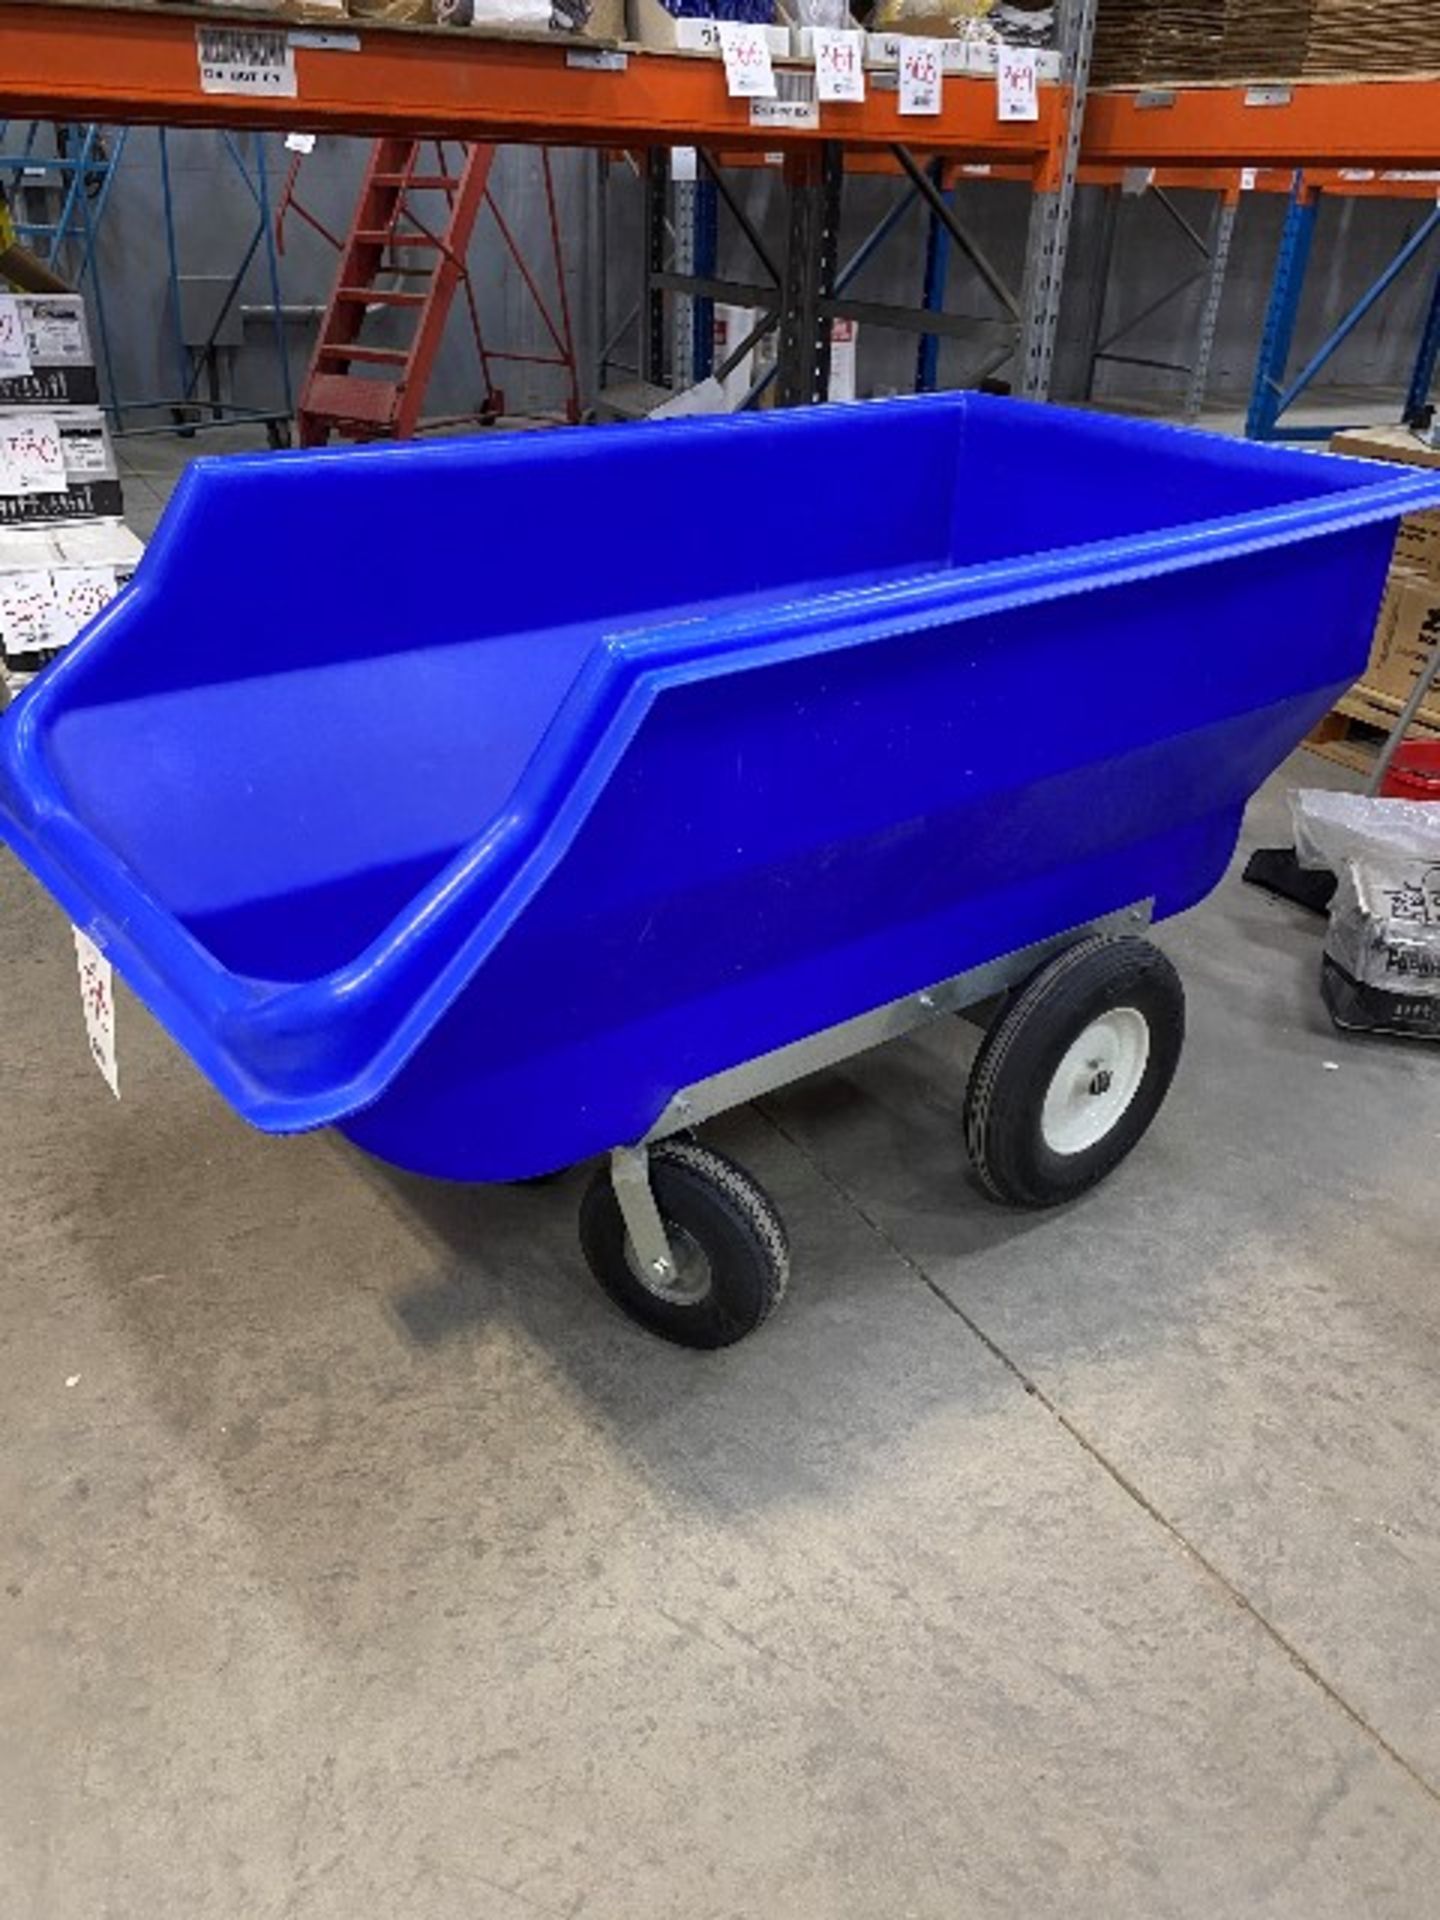 Mobile heavy duty recycle bin cart - Image 2 of 2